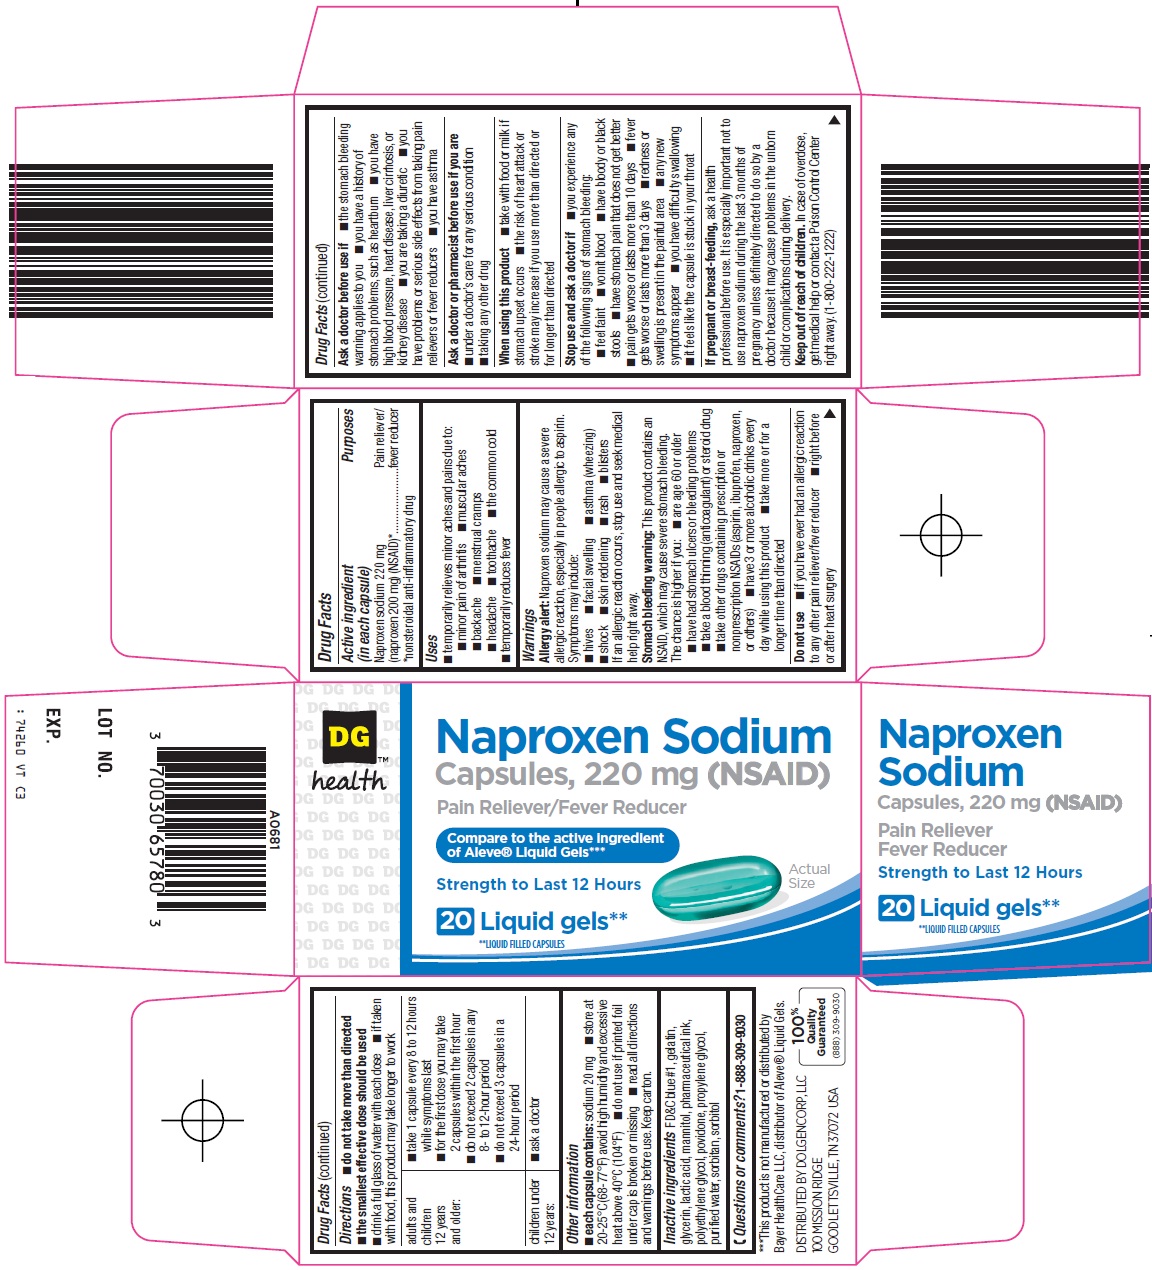 Naproxen Sodium, Capsules 220 mg (NSAID) Carton Image